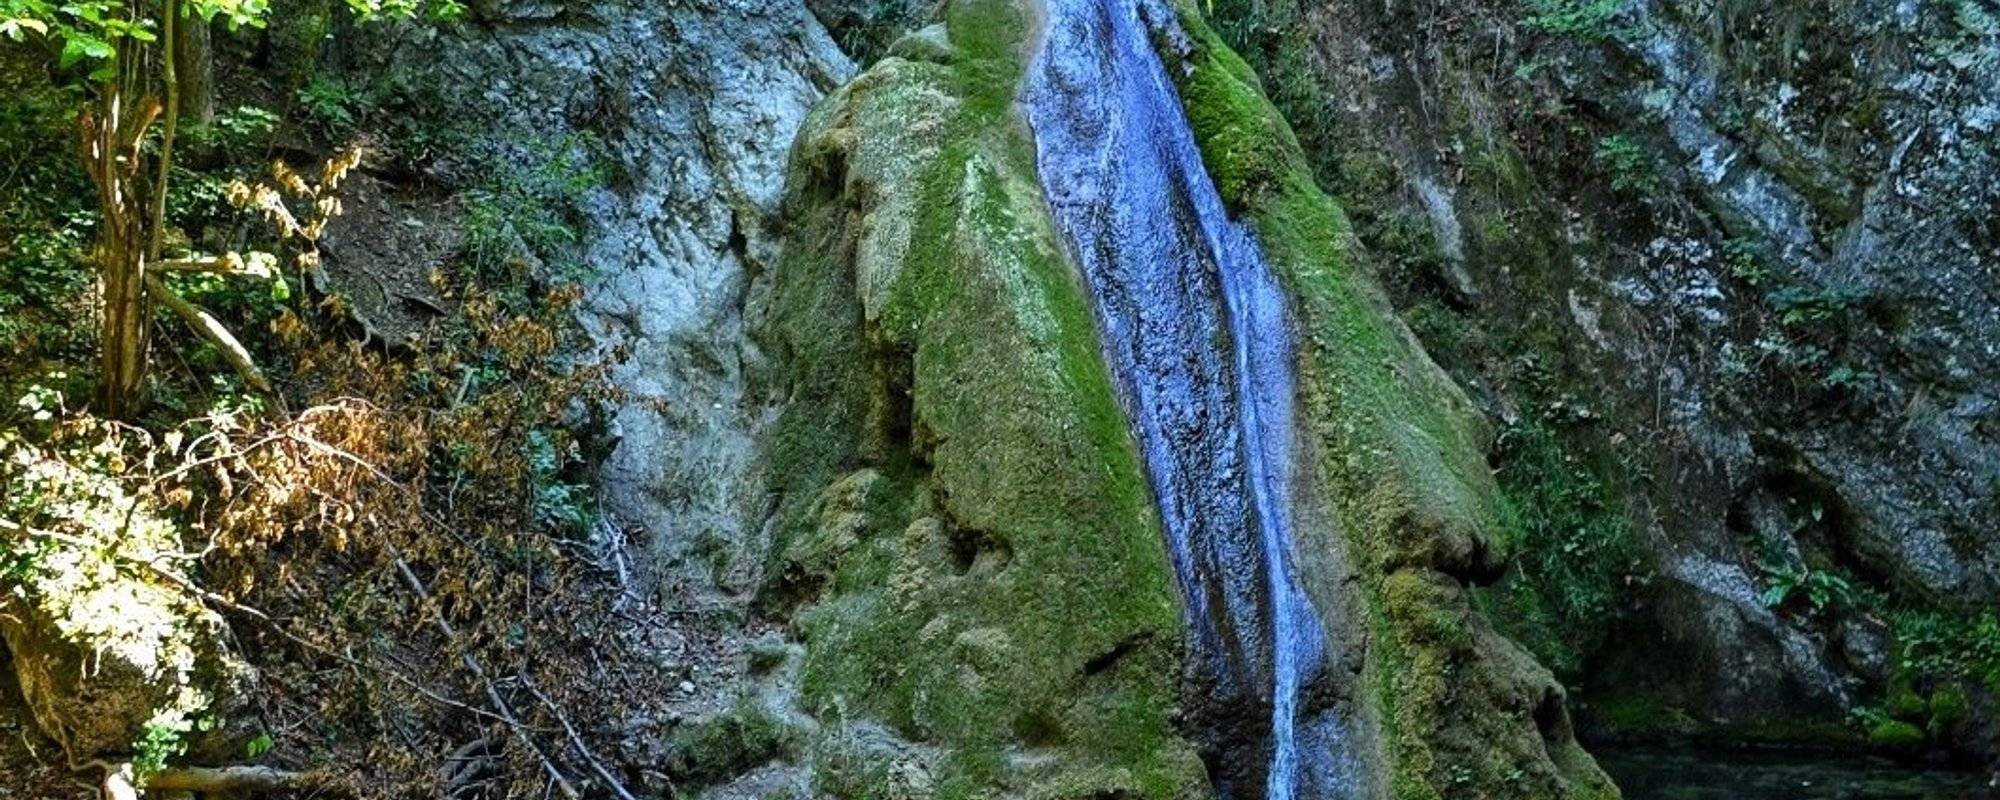 Let's travel together #44 - Şuşara Waterfall (Cascada Şuşara)